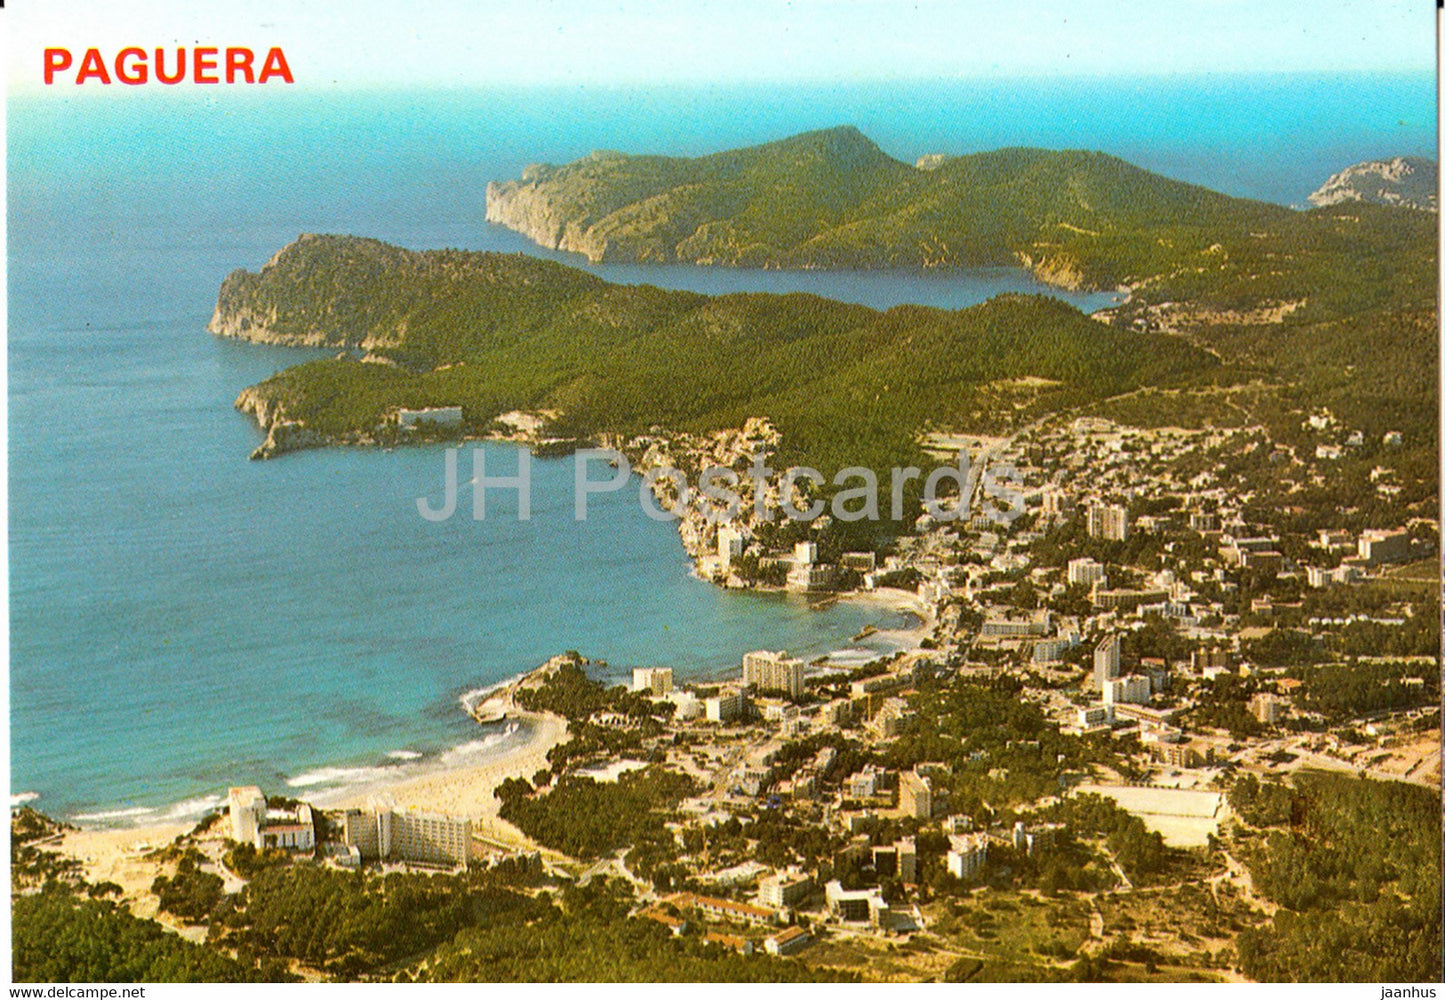 Paguera - Mallorca - 2907 - Spain - unused - JH Postcards